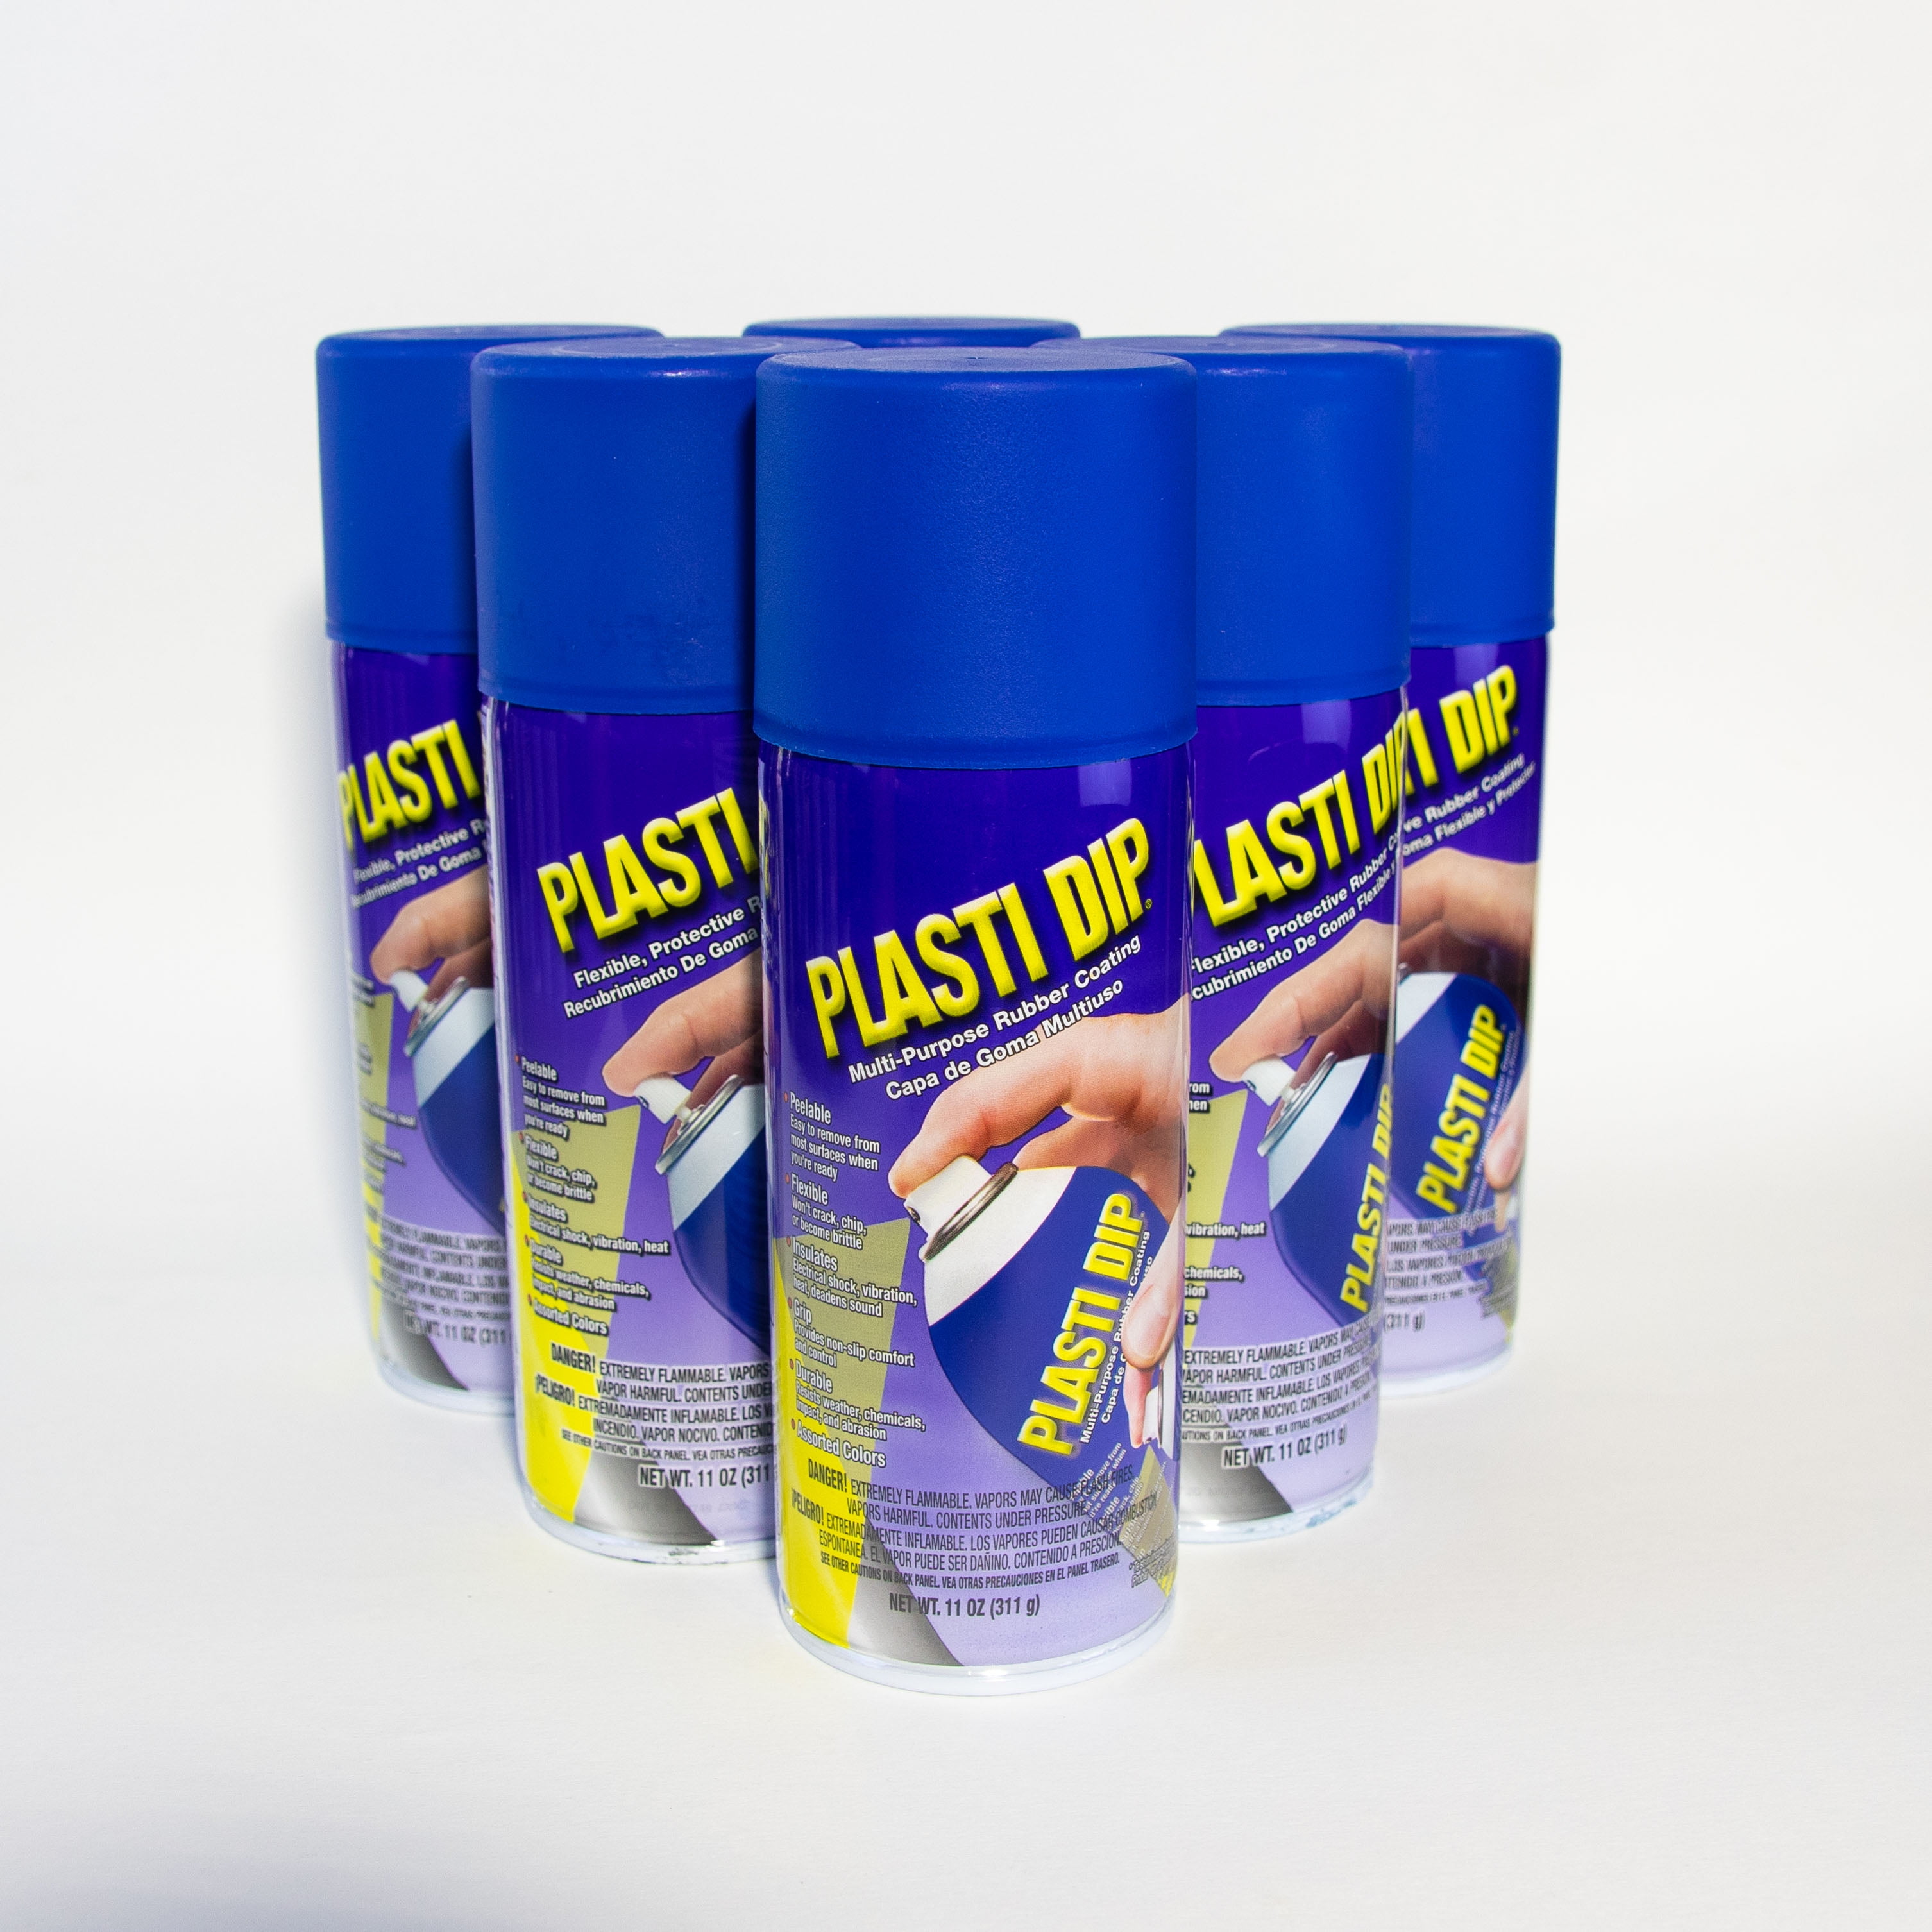 Plasti Dip Spray (Aerosol) – AJK Plasti Dip